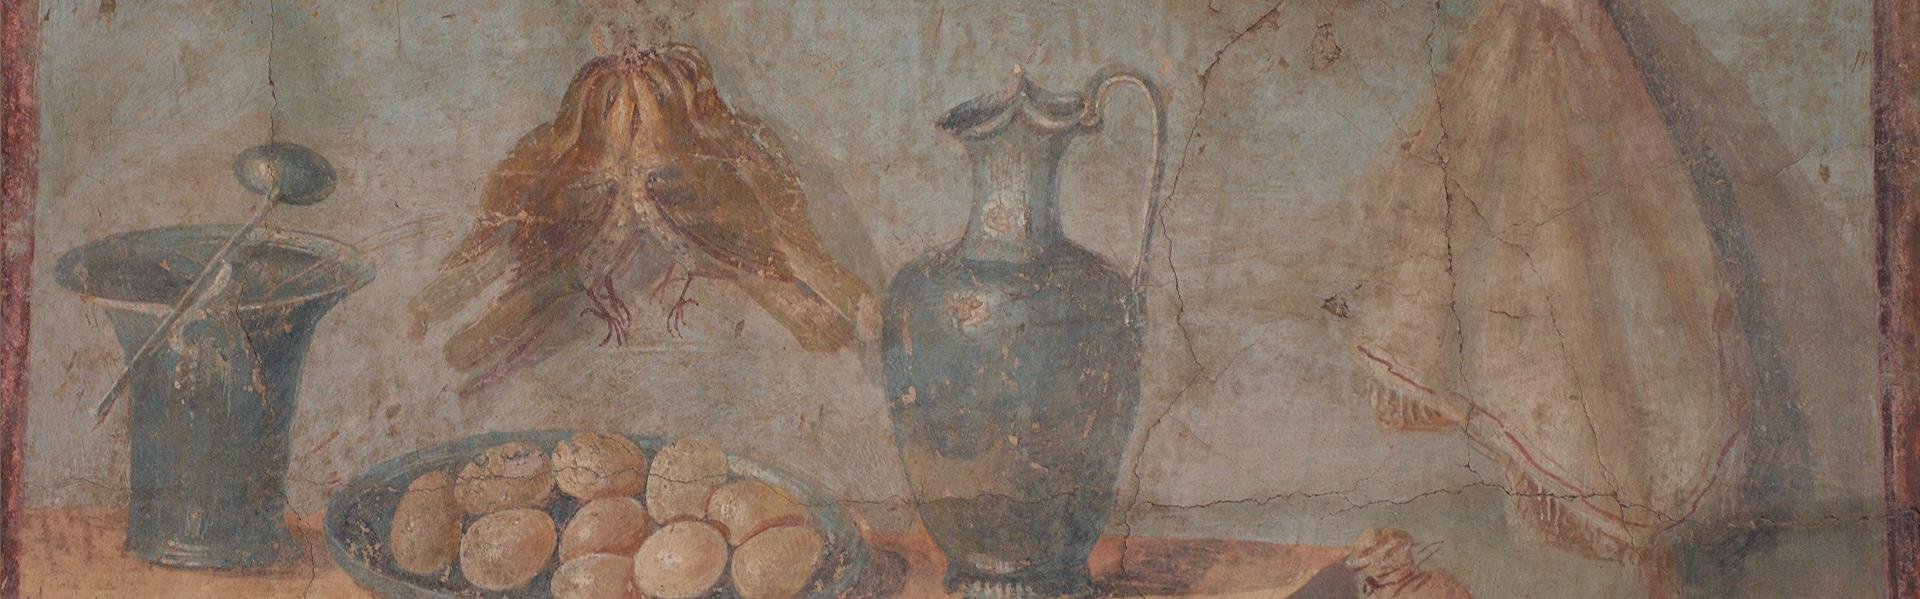 Fresco uit Pompeï, Archeologisch museum Napels, Italië